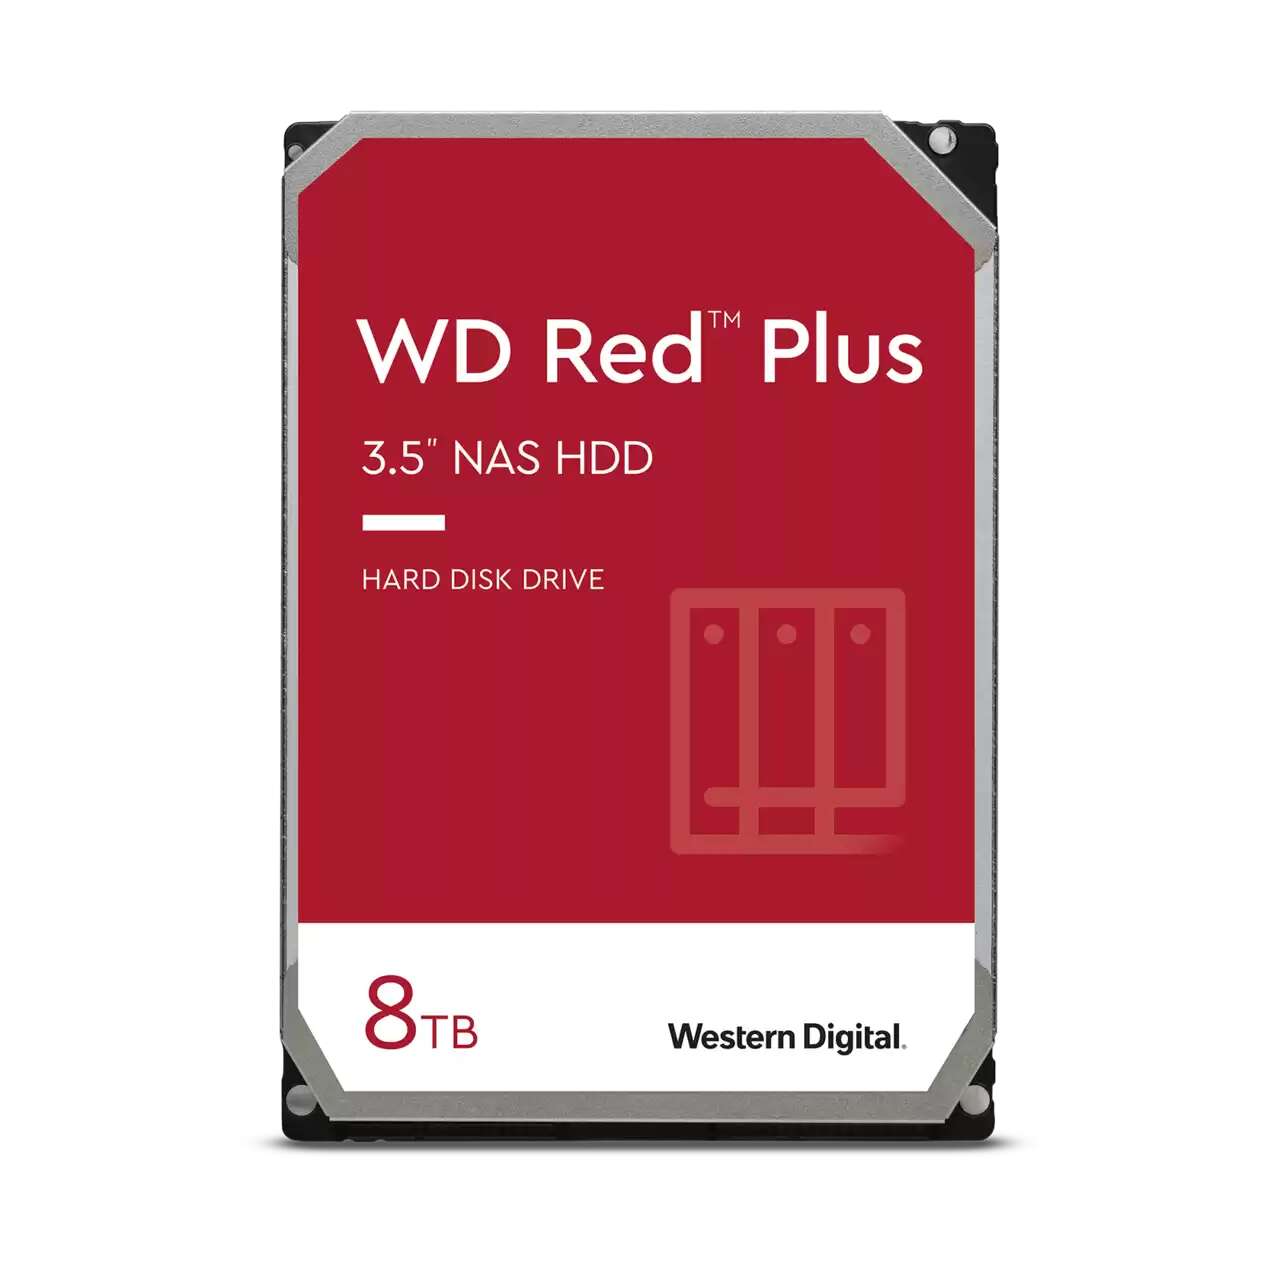 Western digital 8tb red plus (128mb / 7200rpm) sata3 3.5" nas hdd